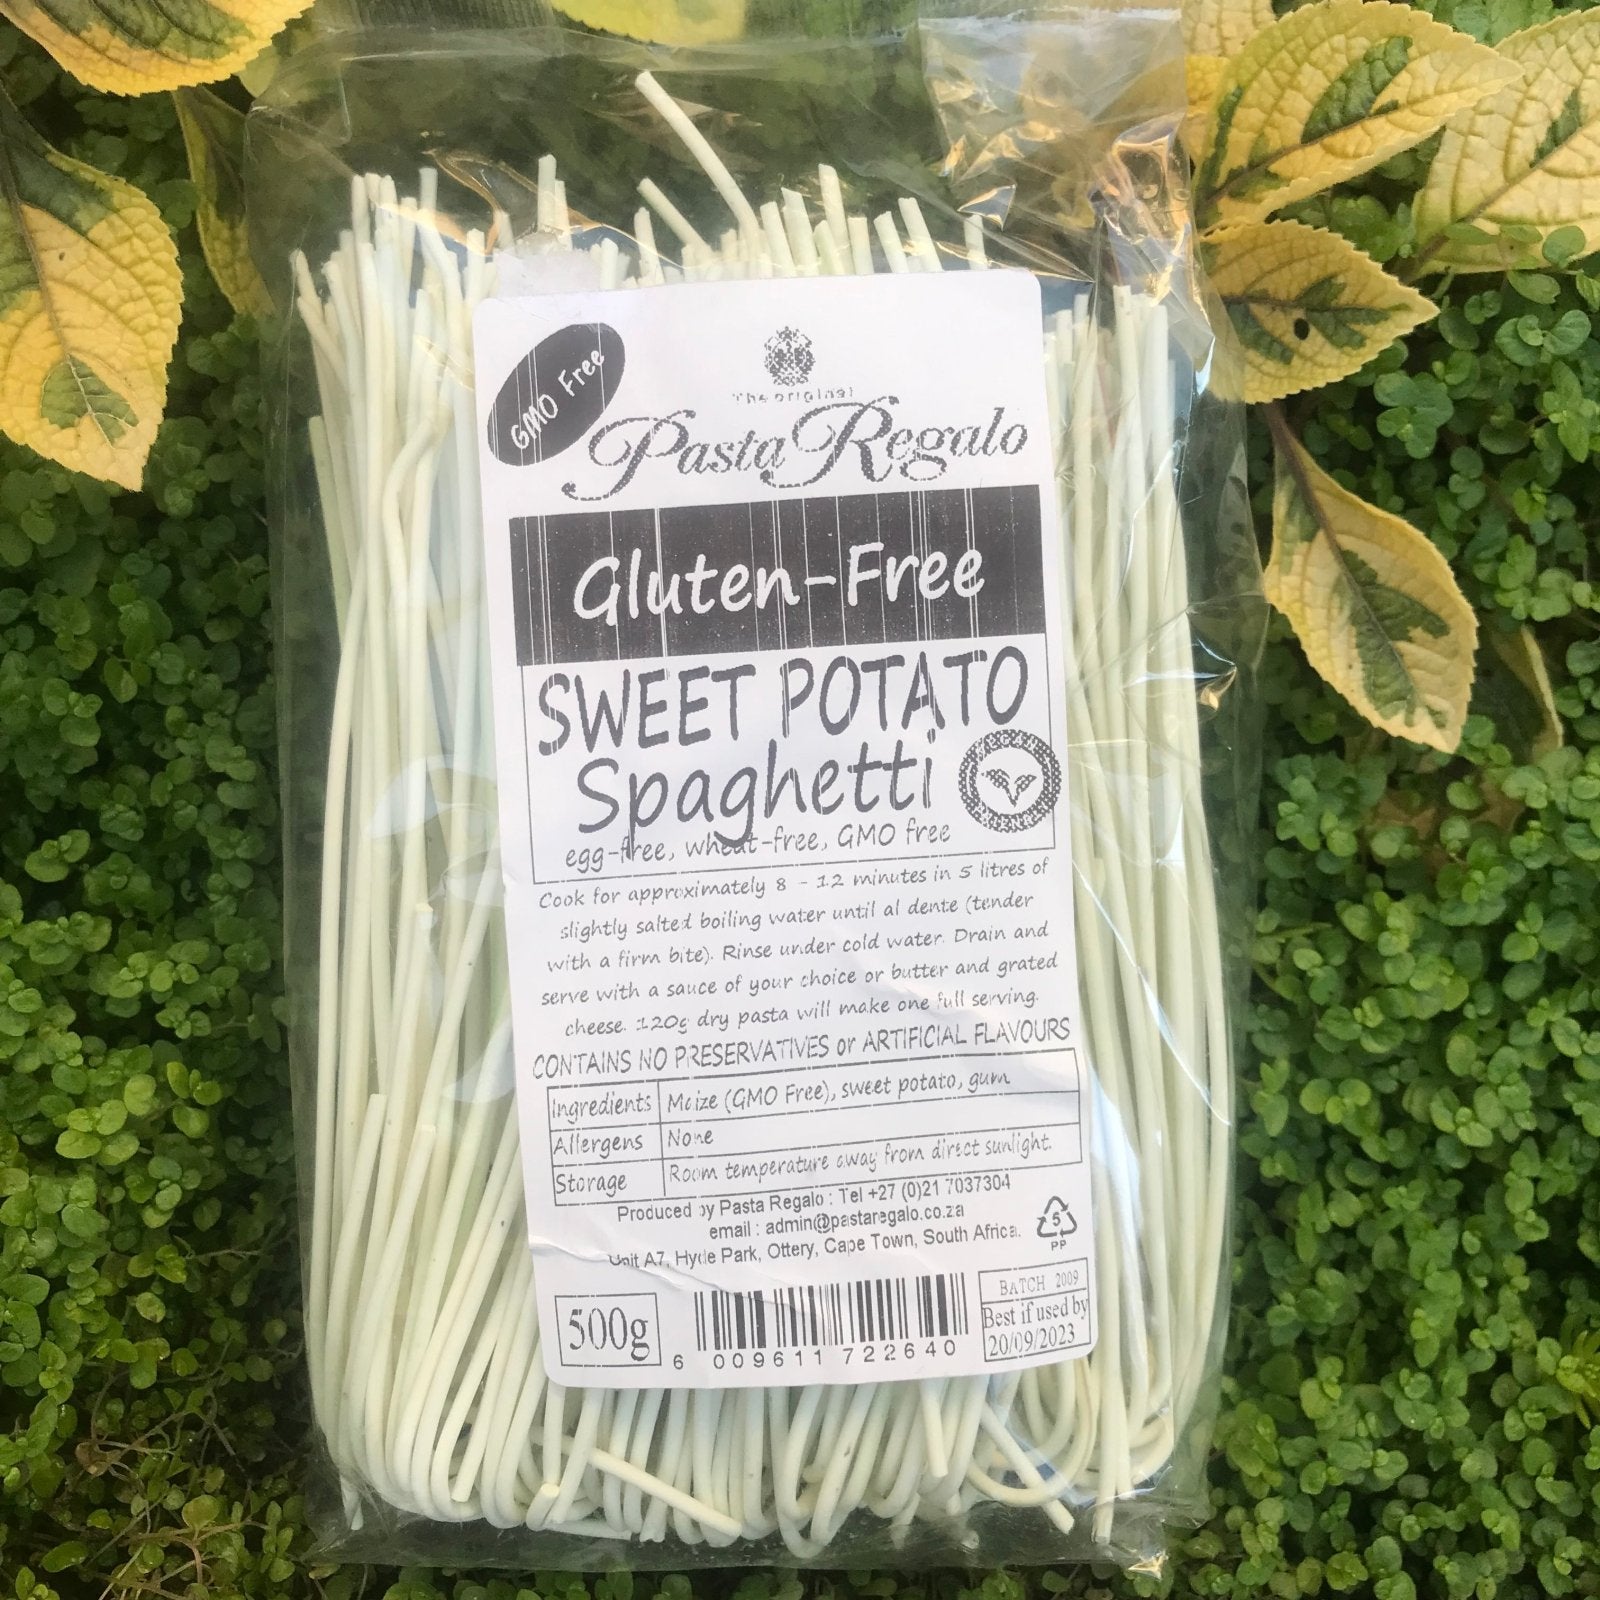 Gluten Free Sweet Potato Spaghetti (500g) - The Deli